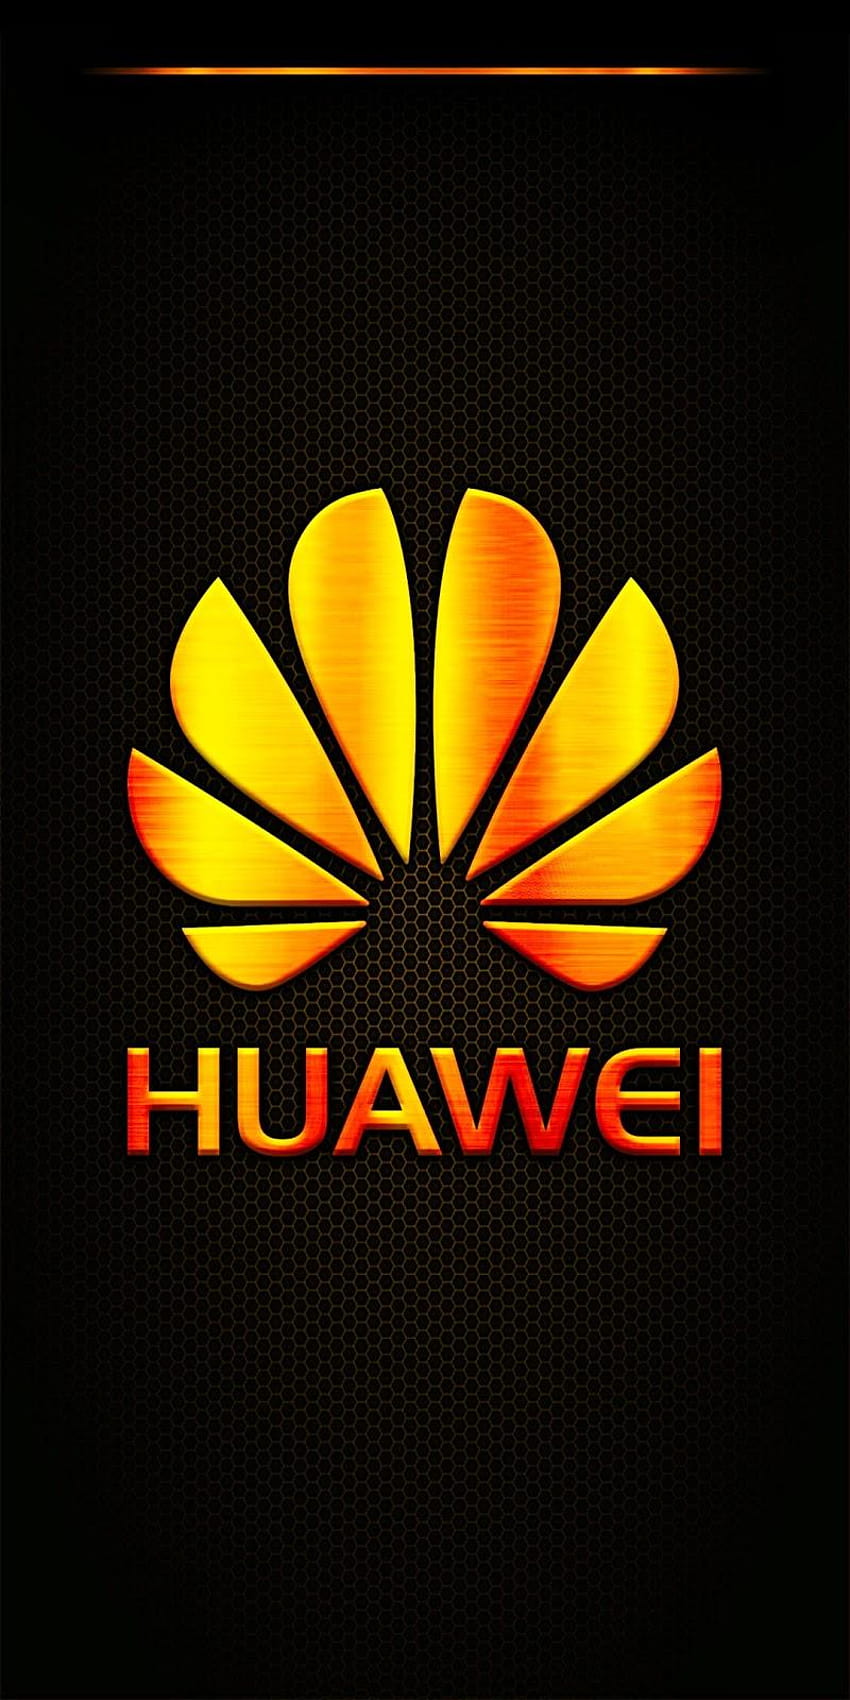 Huawei wallpaper on Behance